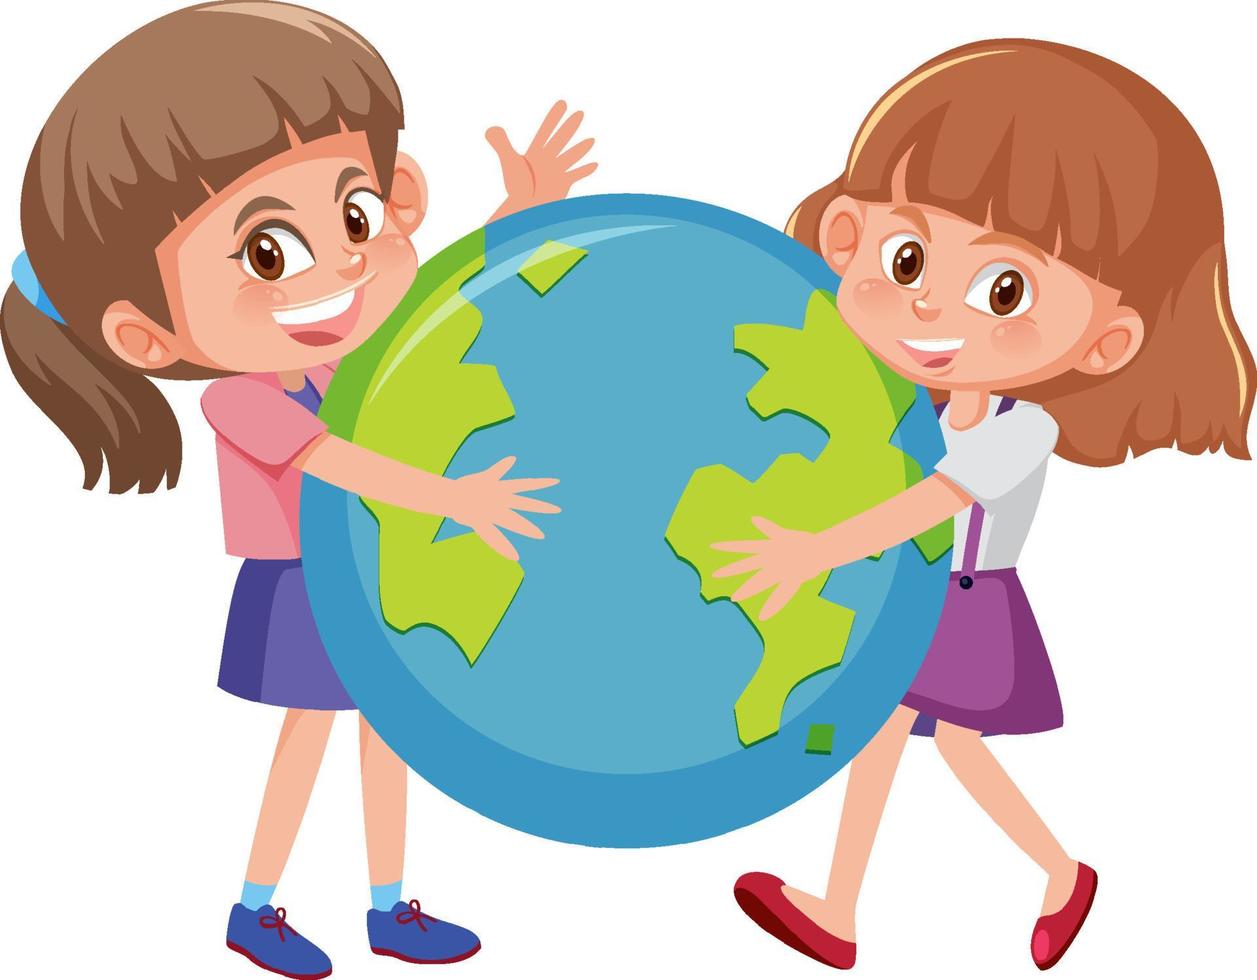 Two girls hugging earth globe togetherin cartoon style vector